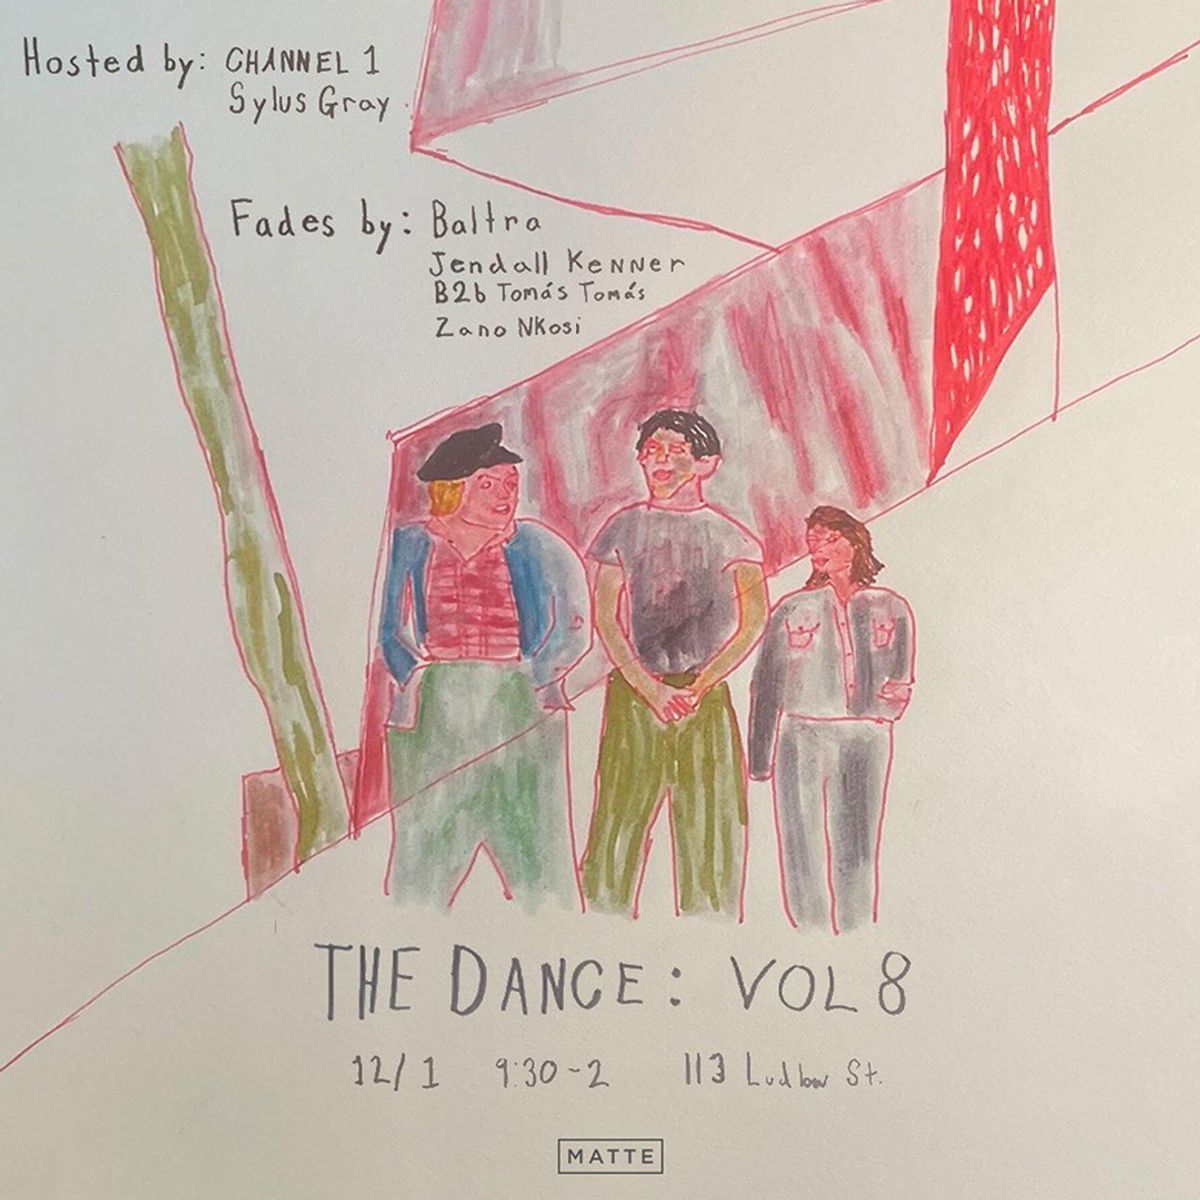 The Dance Vol. 8